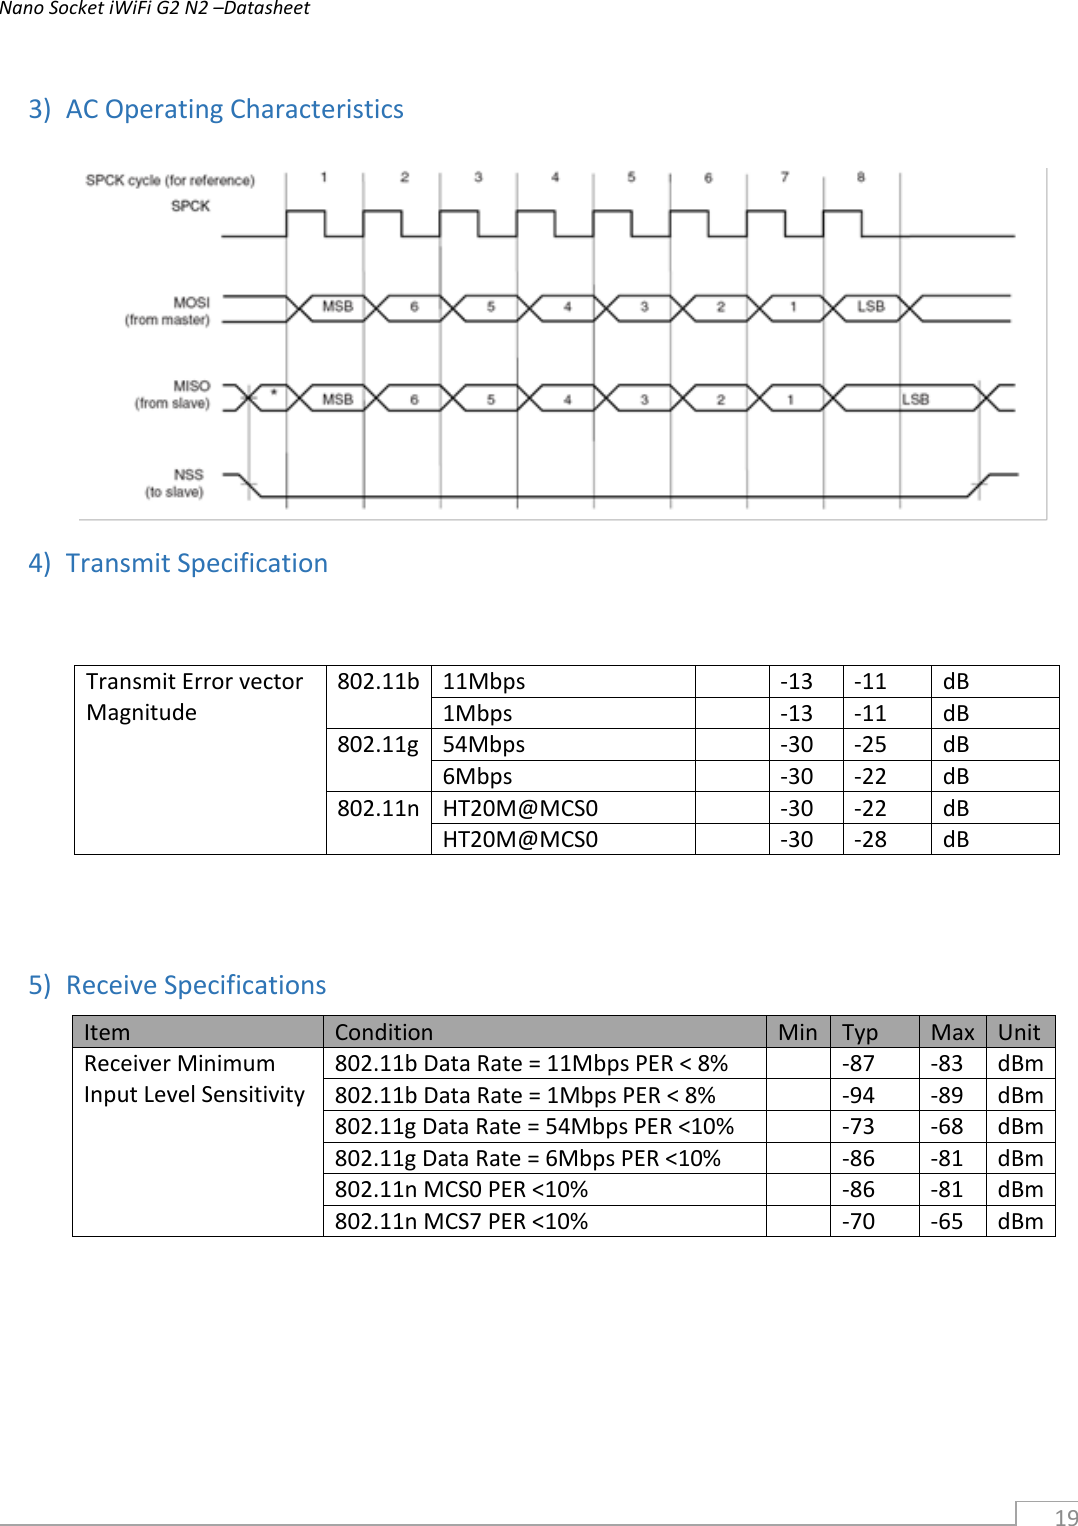 Nano Socket iWiFi G2 N2 –Datasheet 19 3) AC Operating Characteristics4) Transmit SpecificationTransmit Error vector Magnitude 802.11b  11Mbps  -13  -11 dB 1Mbps  -13  -11 dB 802.11g  54Mbps  -30  -25 dB 6Mbps  -30  -22 dB 802.11n  HT20M@MCS0  -30  -22 dB HT20M@MCS0  -30  -28 dB 5) Receive SpecificationsItem Condition Min Typ Max Unit Receiver Minimum Input Level Sensitivity 802.11b Data Rate = 11Mbps PER &lt; 8% -87 -83 dBm 802.11b Data Rate = 1Mbps PER &lt; 8% -94 -89 dBm 802.11g Data Rate = 54Mbps PER &lt;10% -73 -68 dBm 802.11g Data Rate = 6Mbps PER &lt;10% -86 -81 dBm 802.11n MCS0 PER &lt;10% -86 -81 dBm 802.11n MCS7 PER &lt;10% -70 -65 dBm 